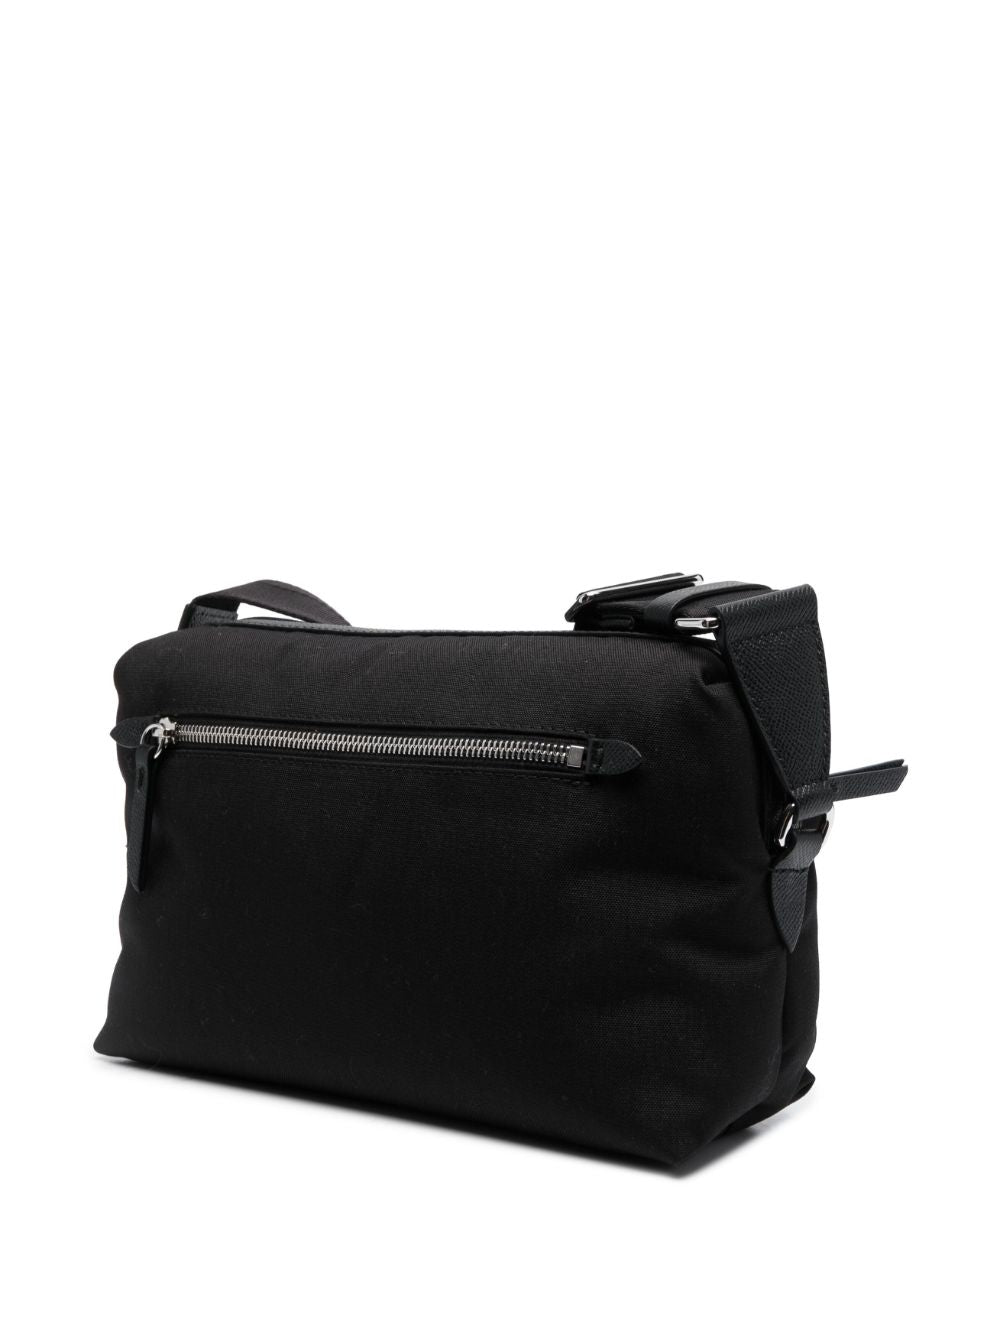 Black Padded Handbag with Adjustable Strap and Logo Patch for Men